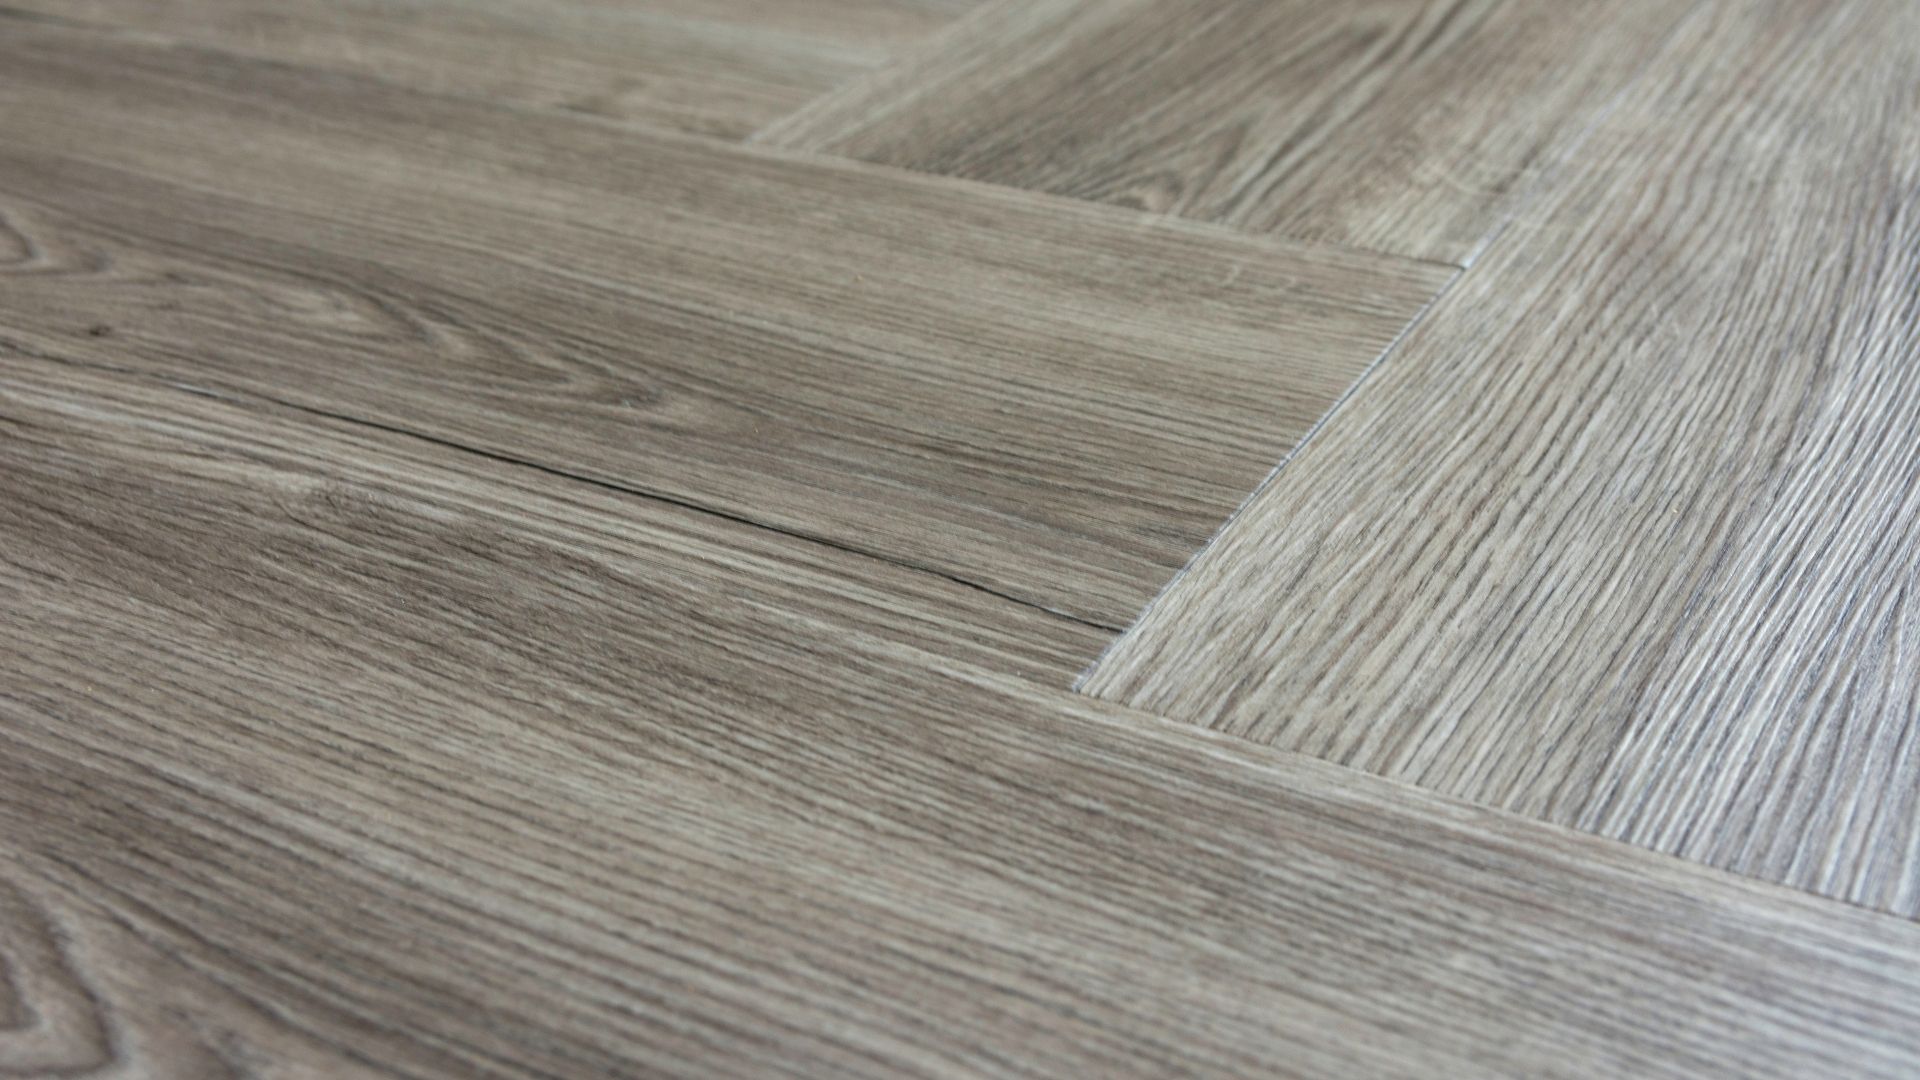 Luxury Vinyl Plank Custom Home Finishes Flooring Denver Colorado Sustainable Design Build 80205 custom home builders